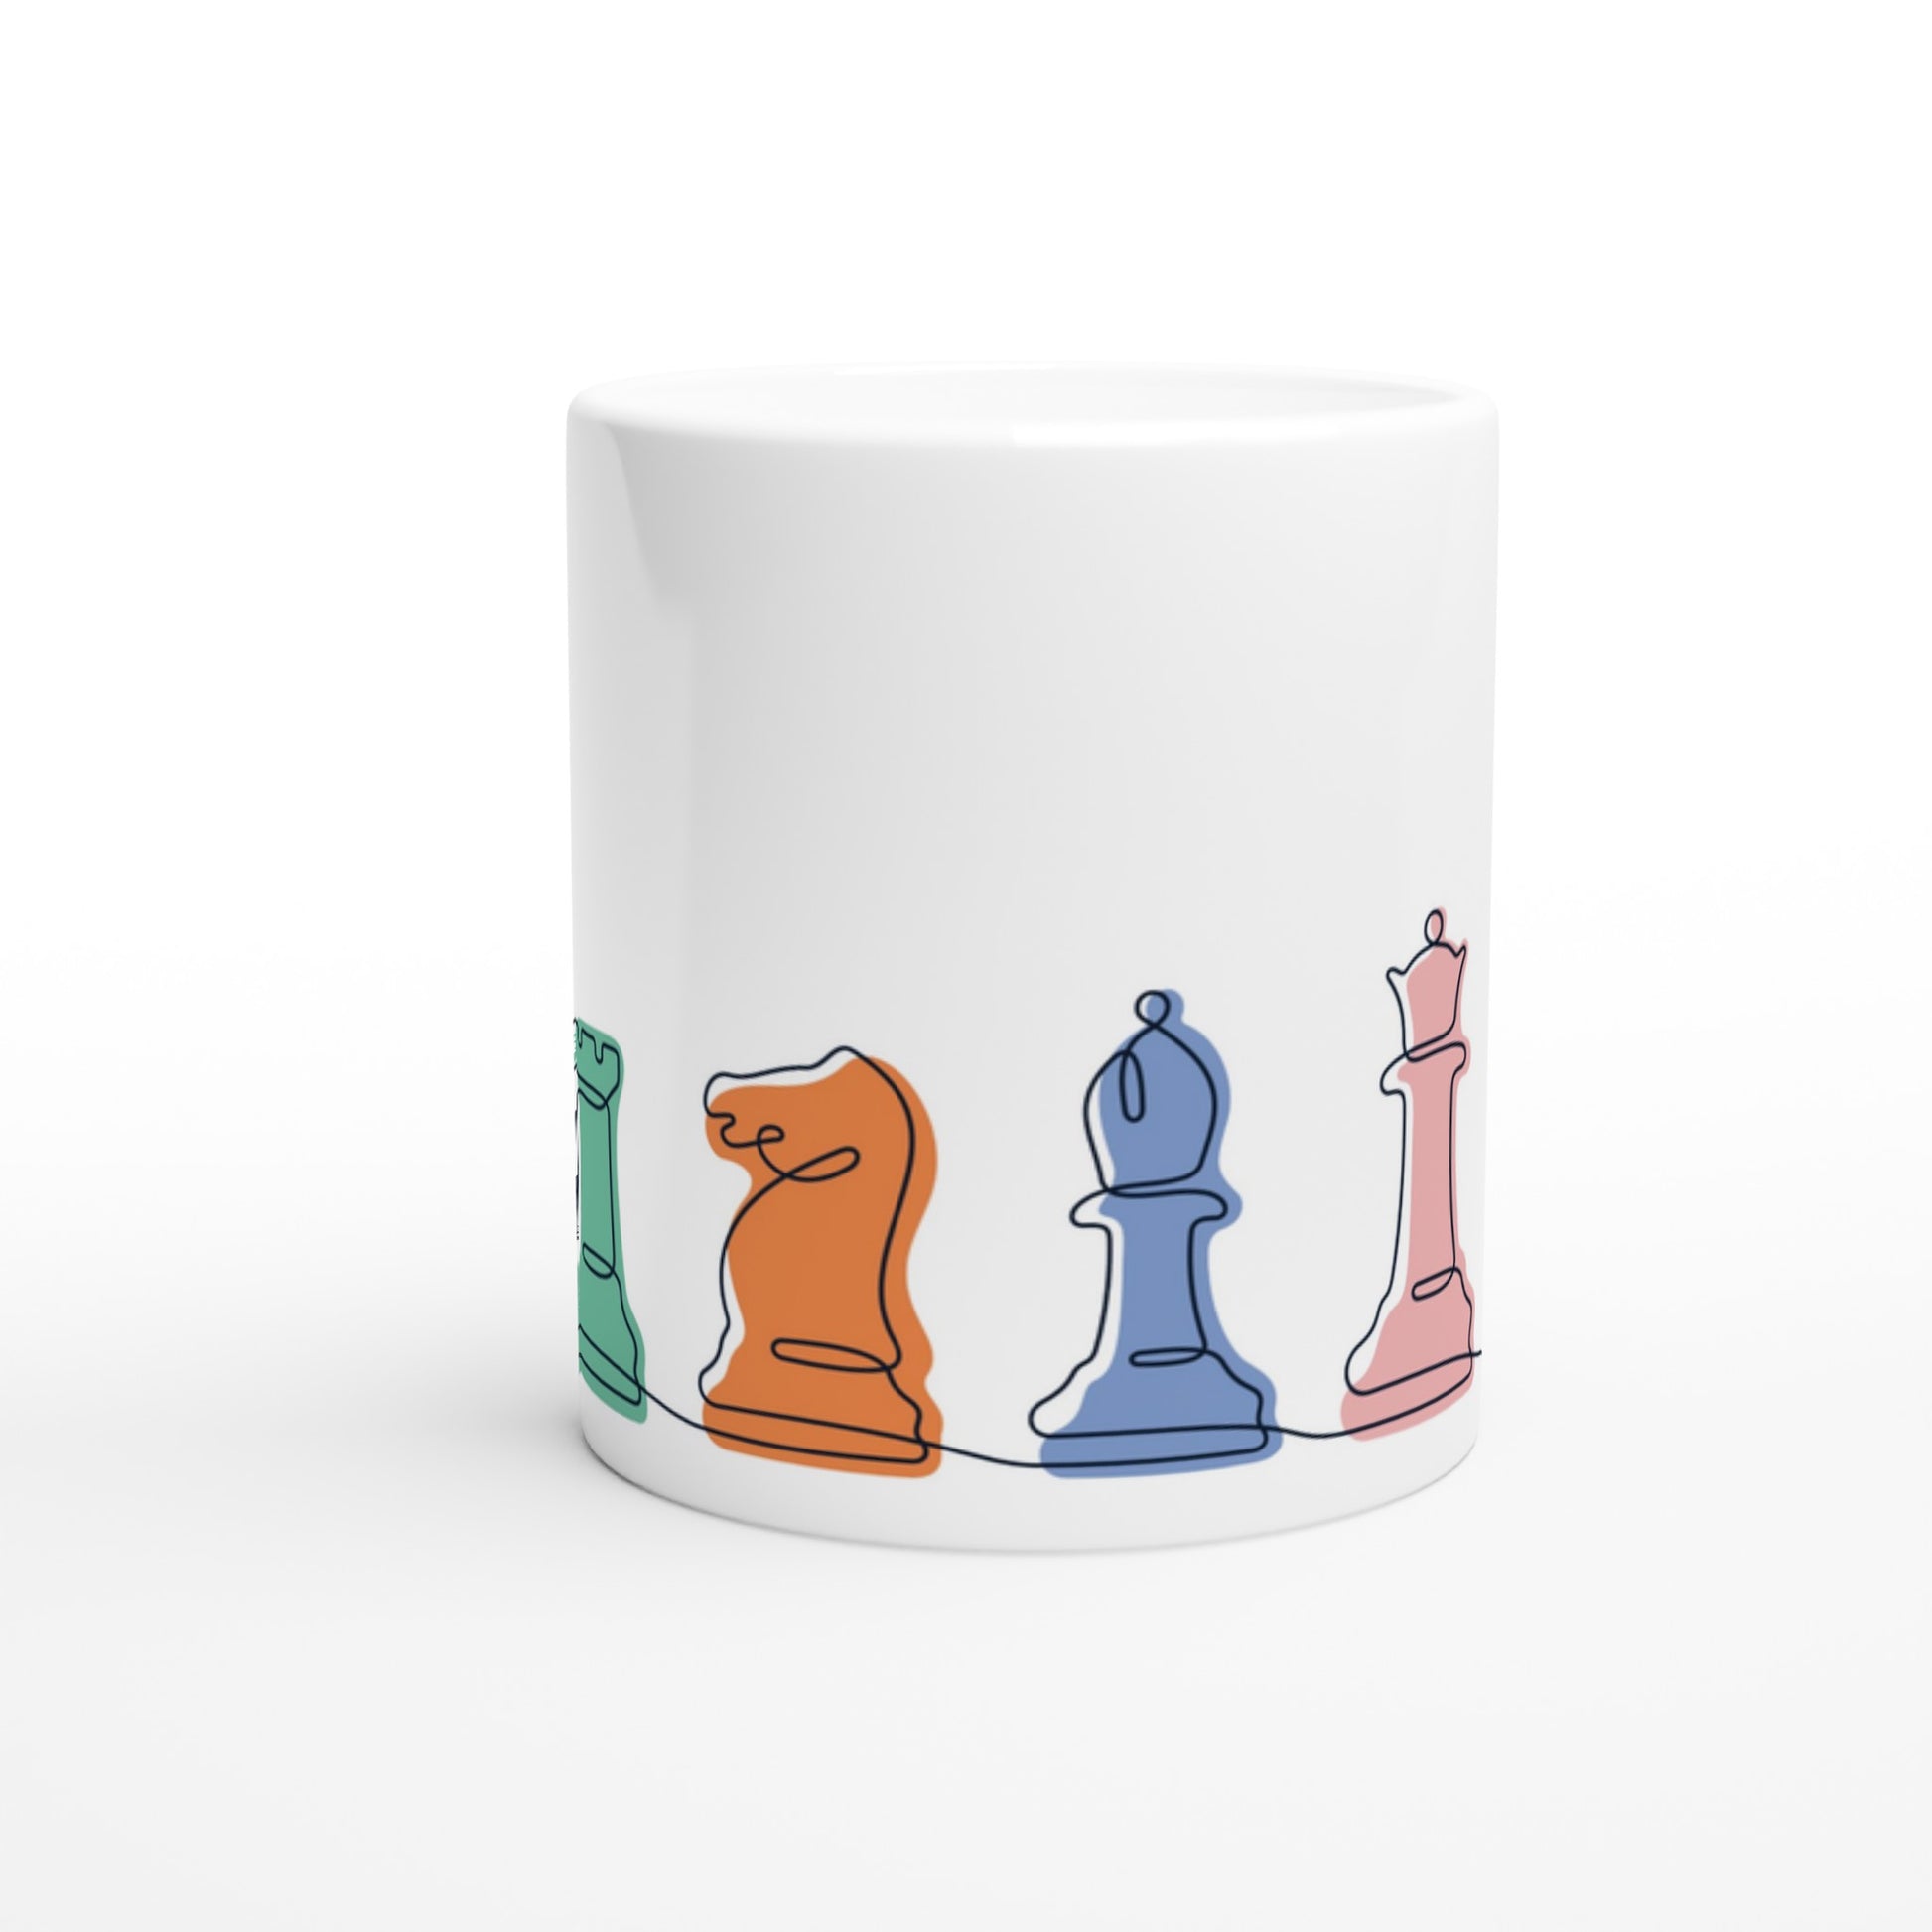 Chess - White 11oz Ceramic Mug White 11oz Mug Games